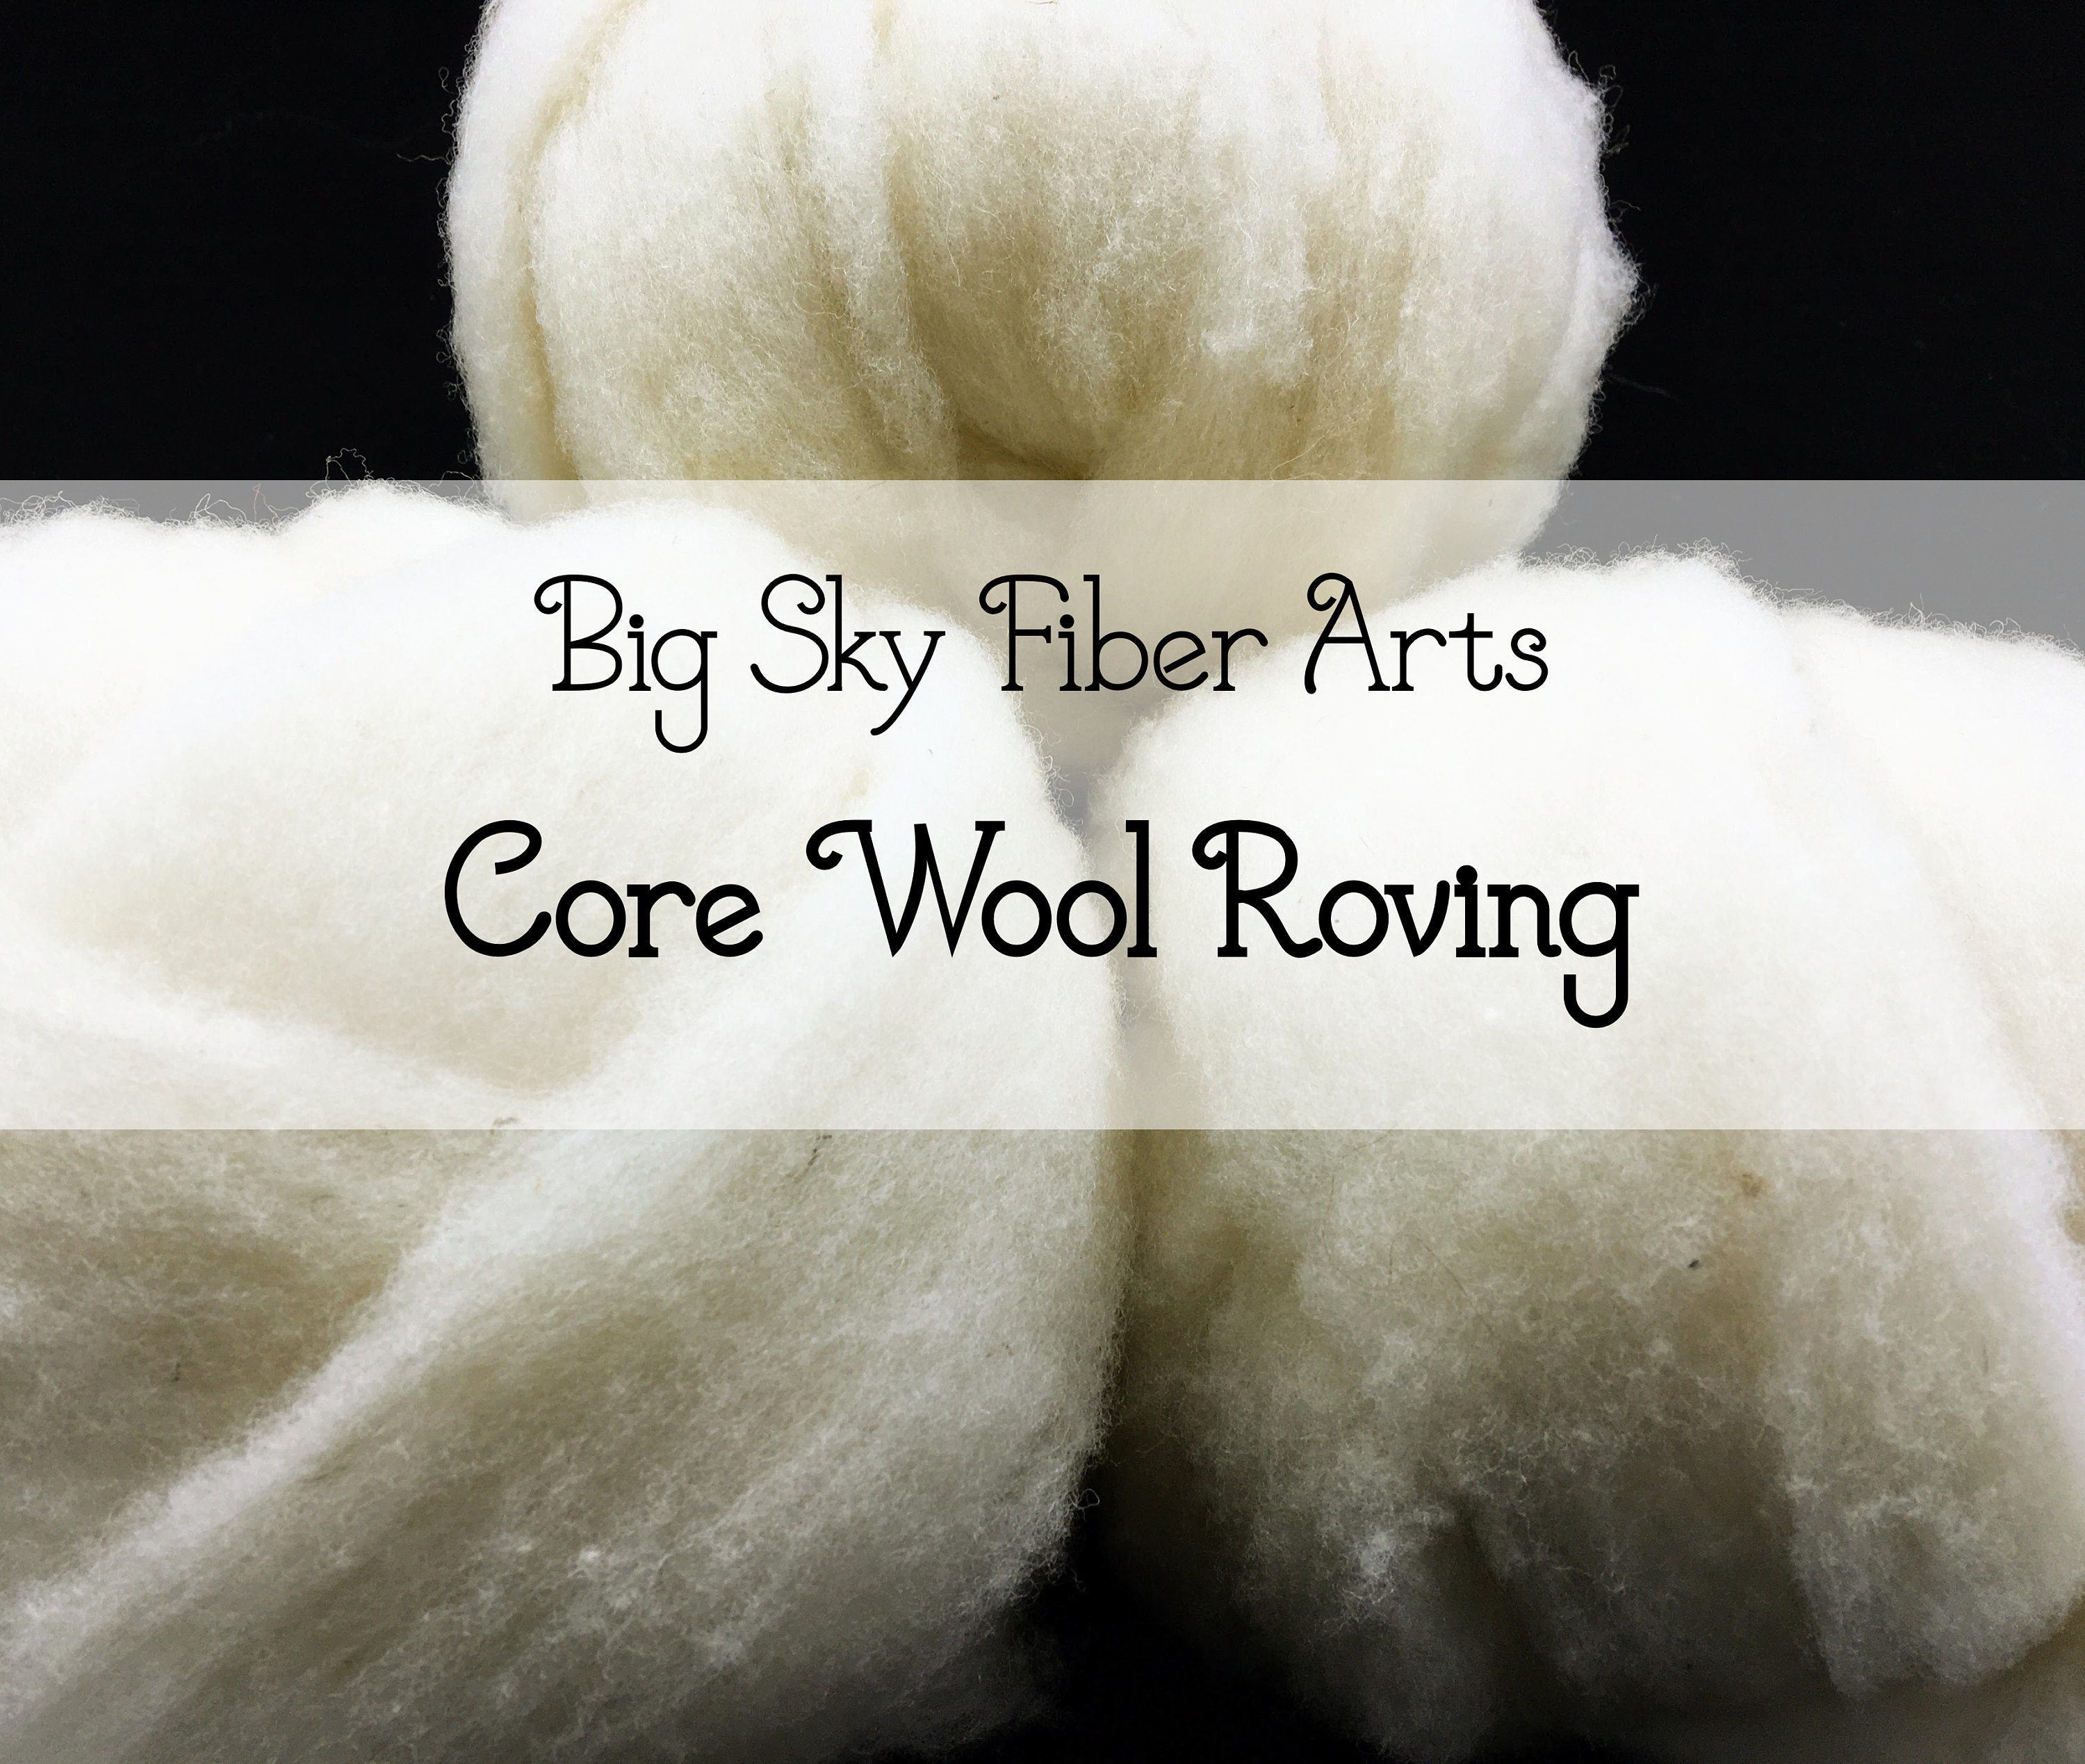 Core wool